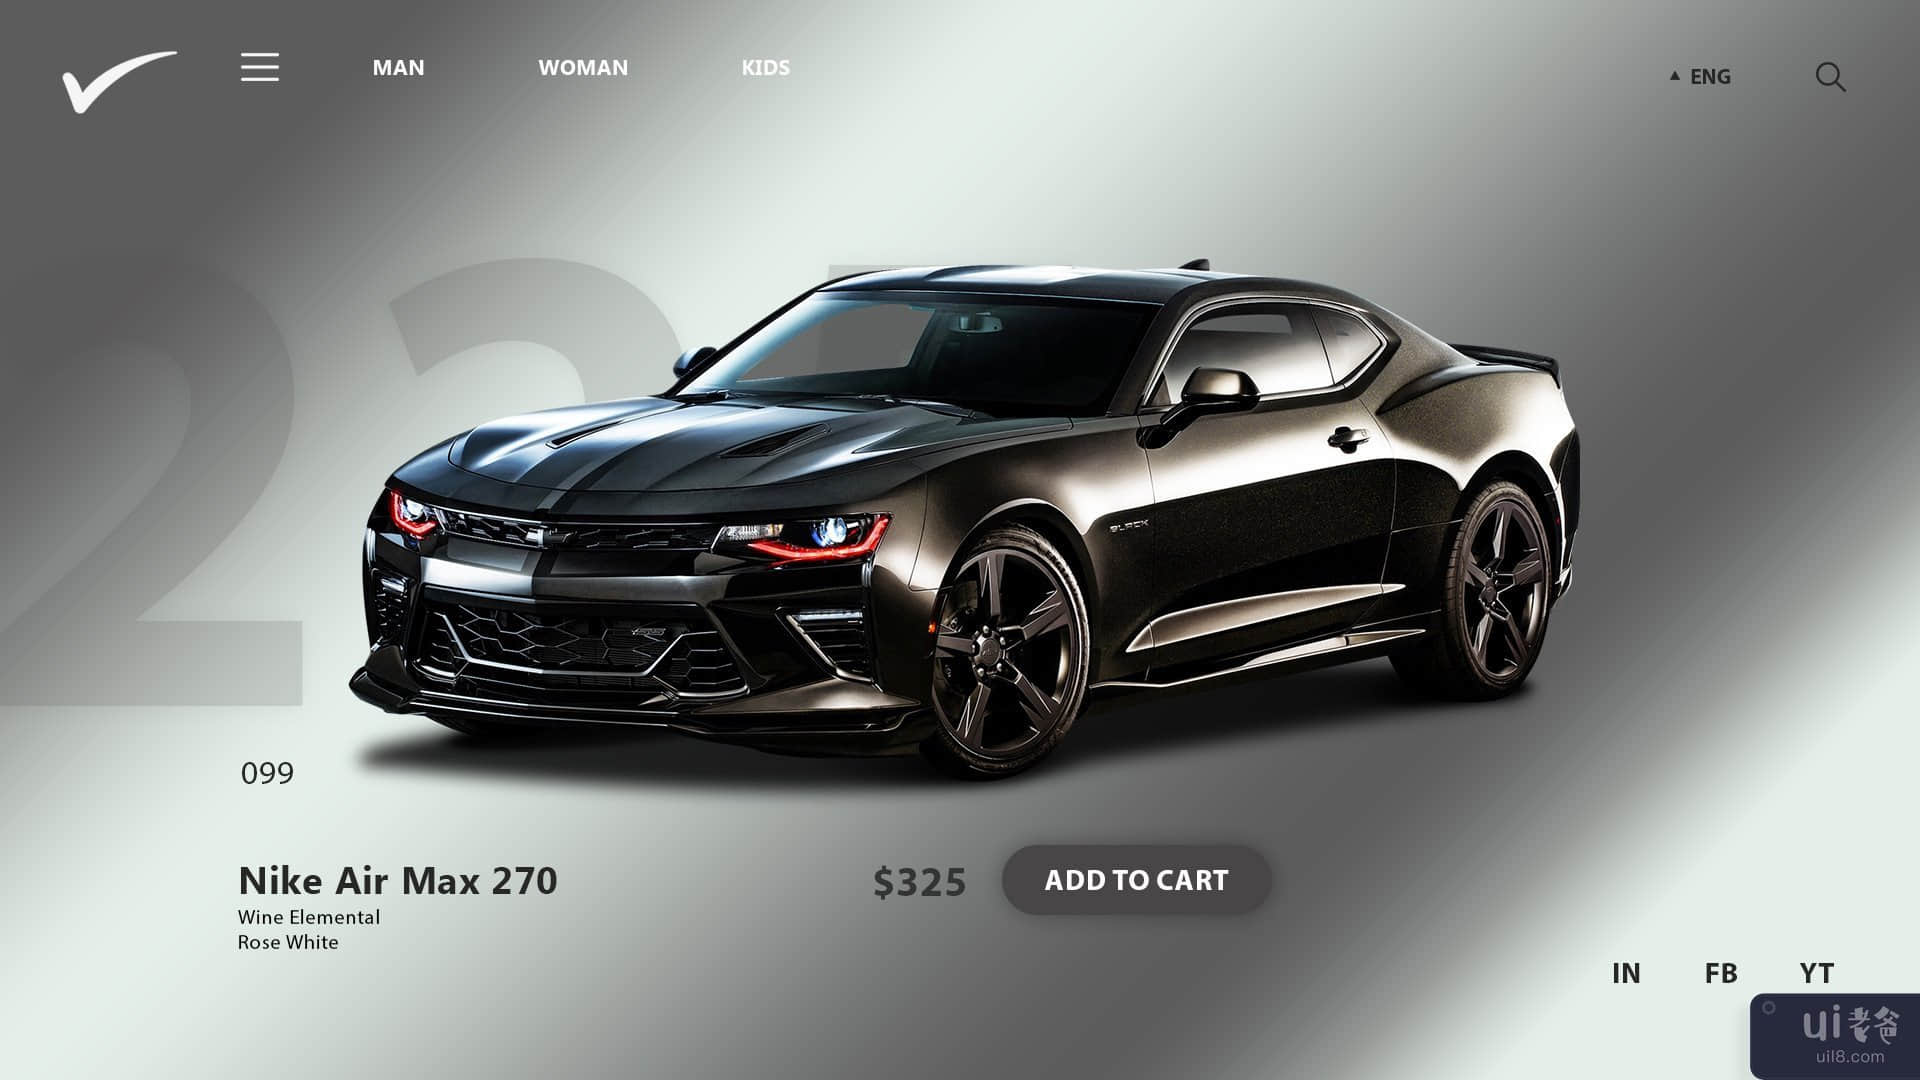 雪佛兰汽车 - 网页登陆页面(Chevrolet Car - Web Landing Page)插图